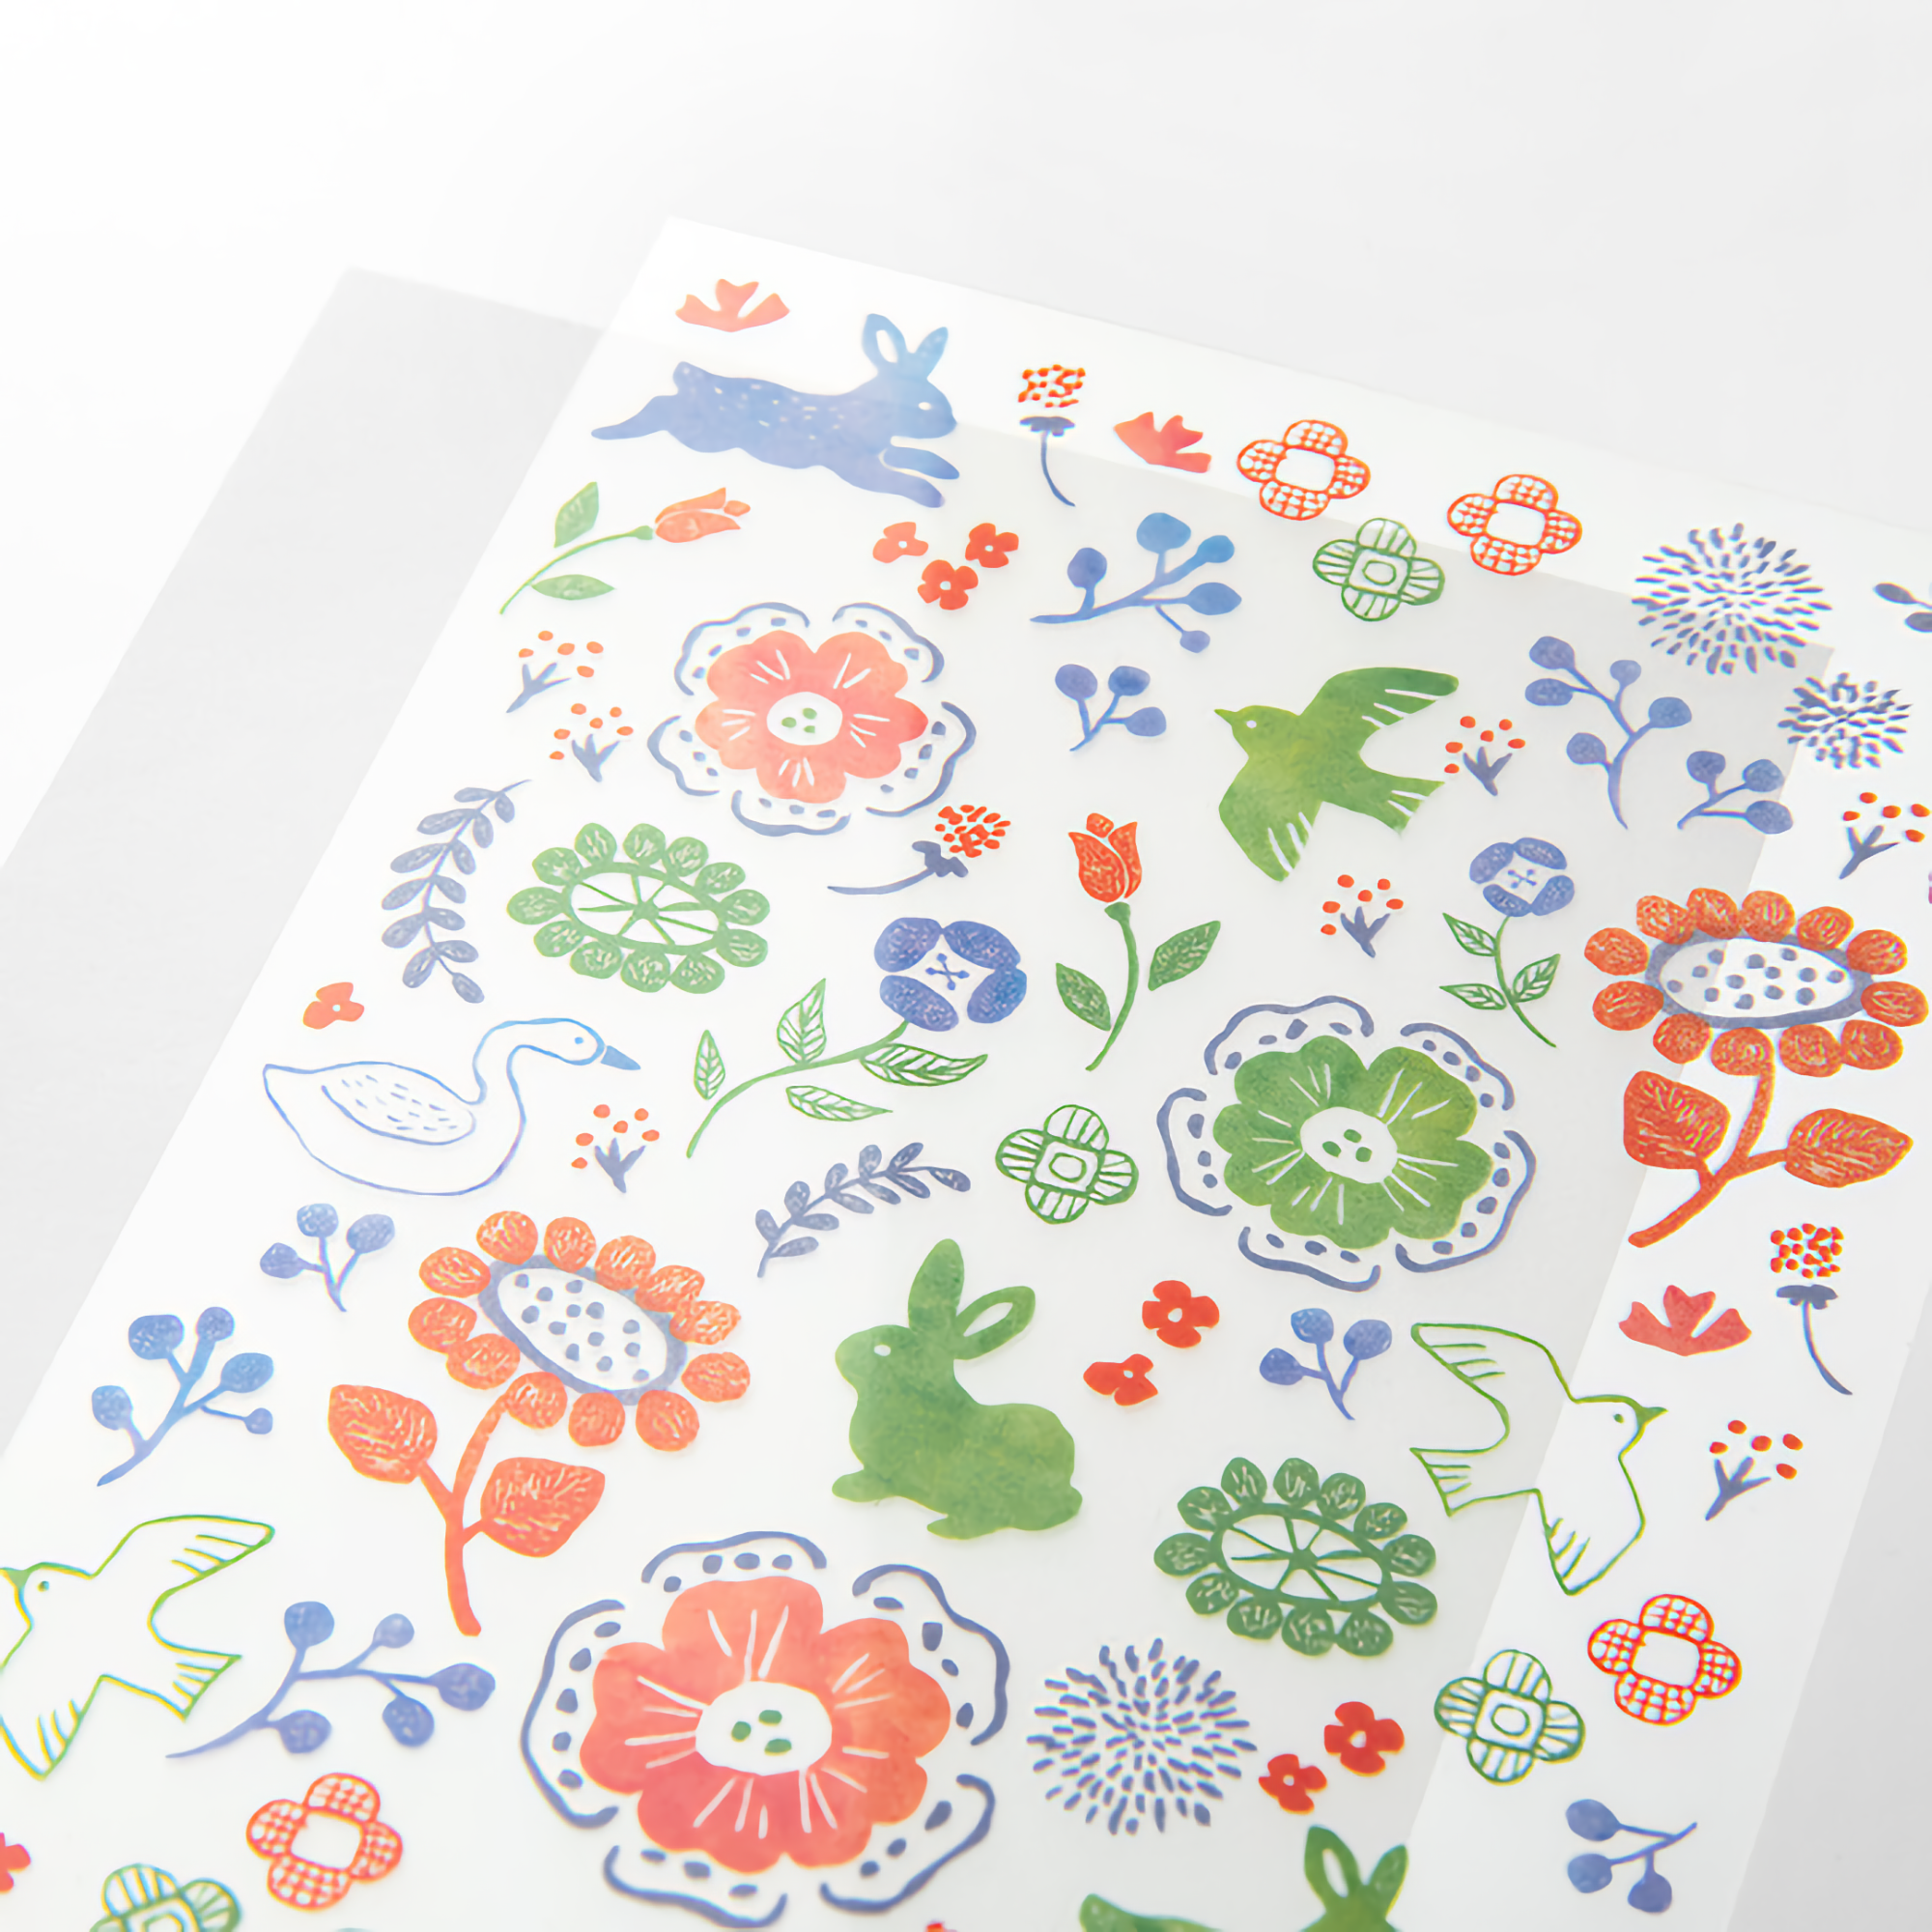 Midori Transfer Stickers Scandinavian Textile Patterns